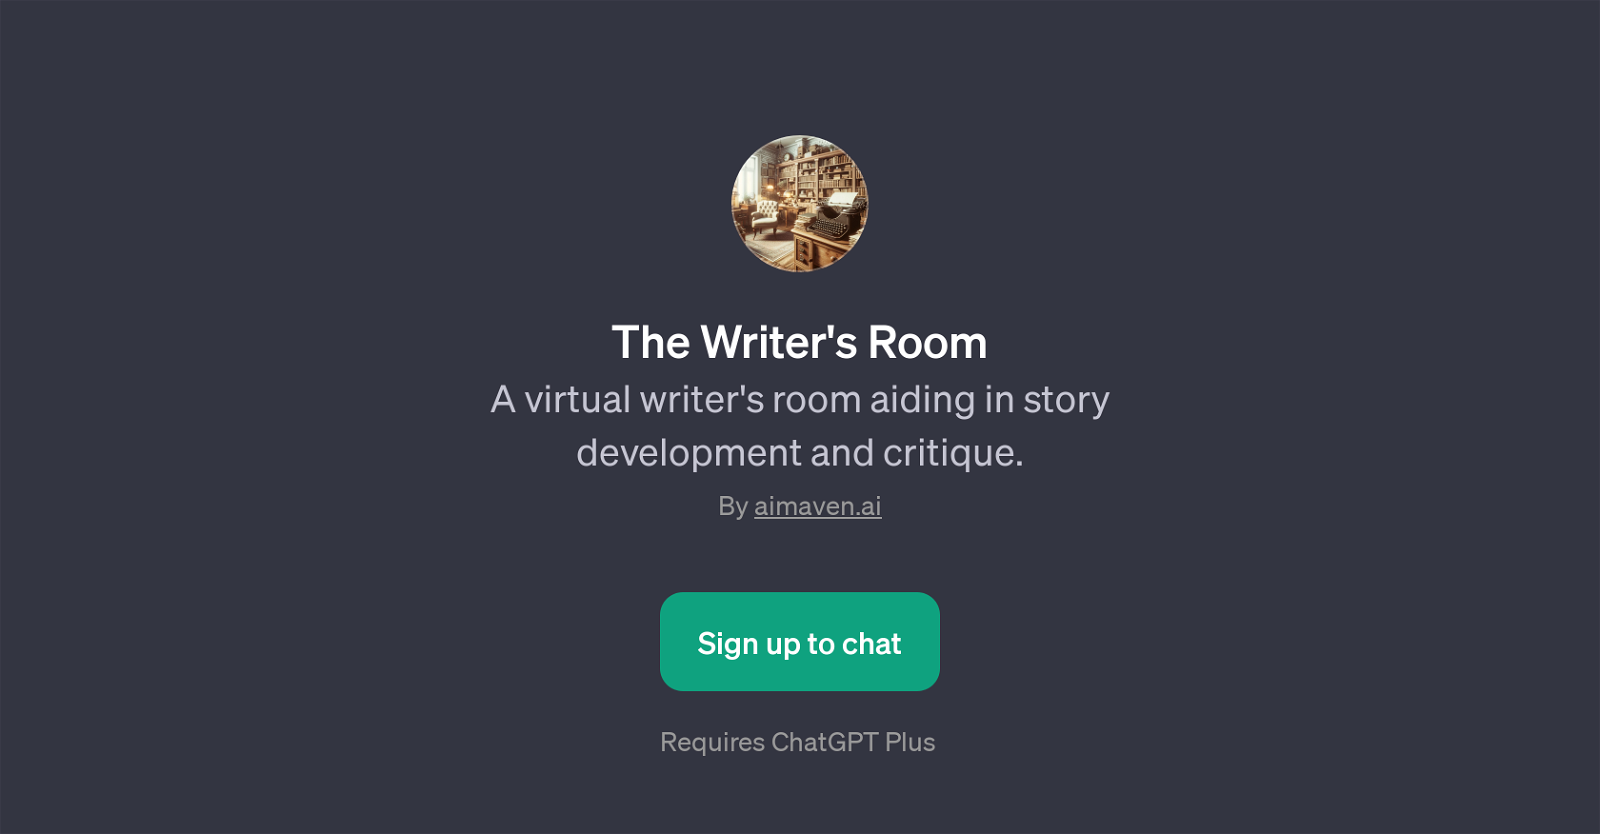 The Writer's Room website